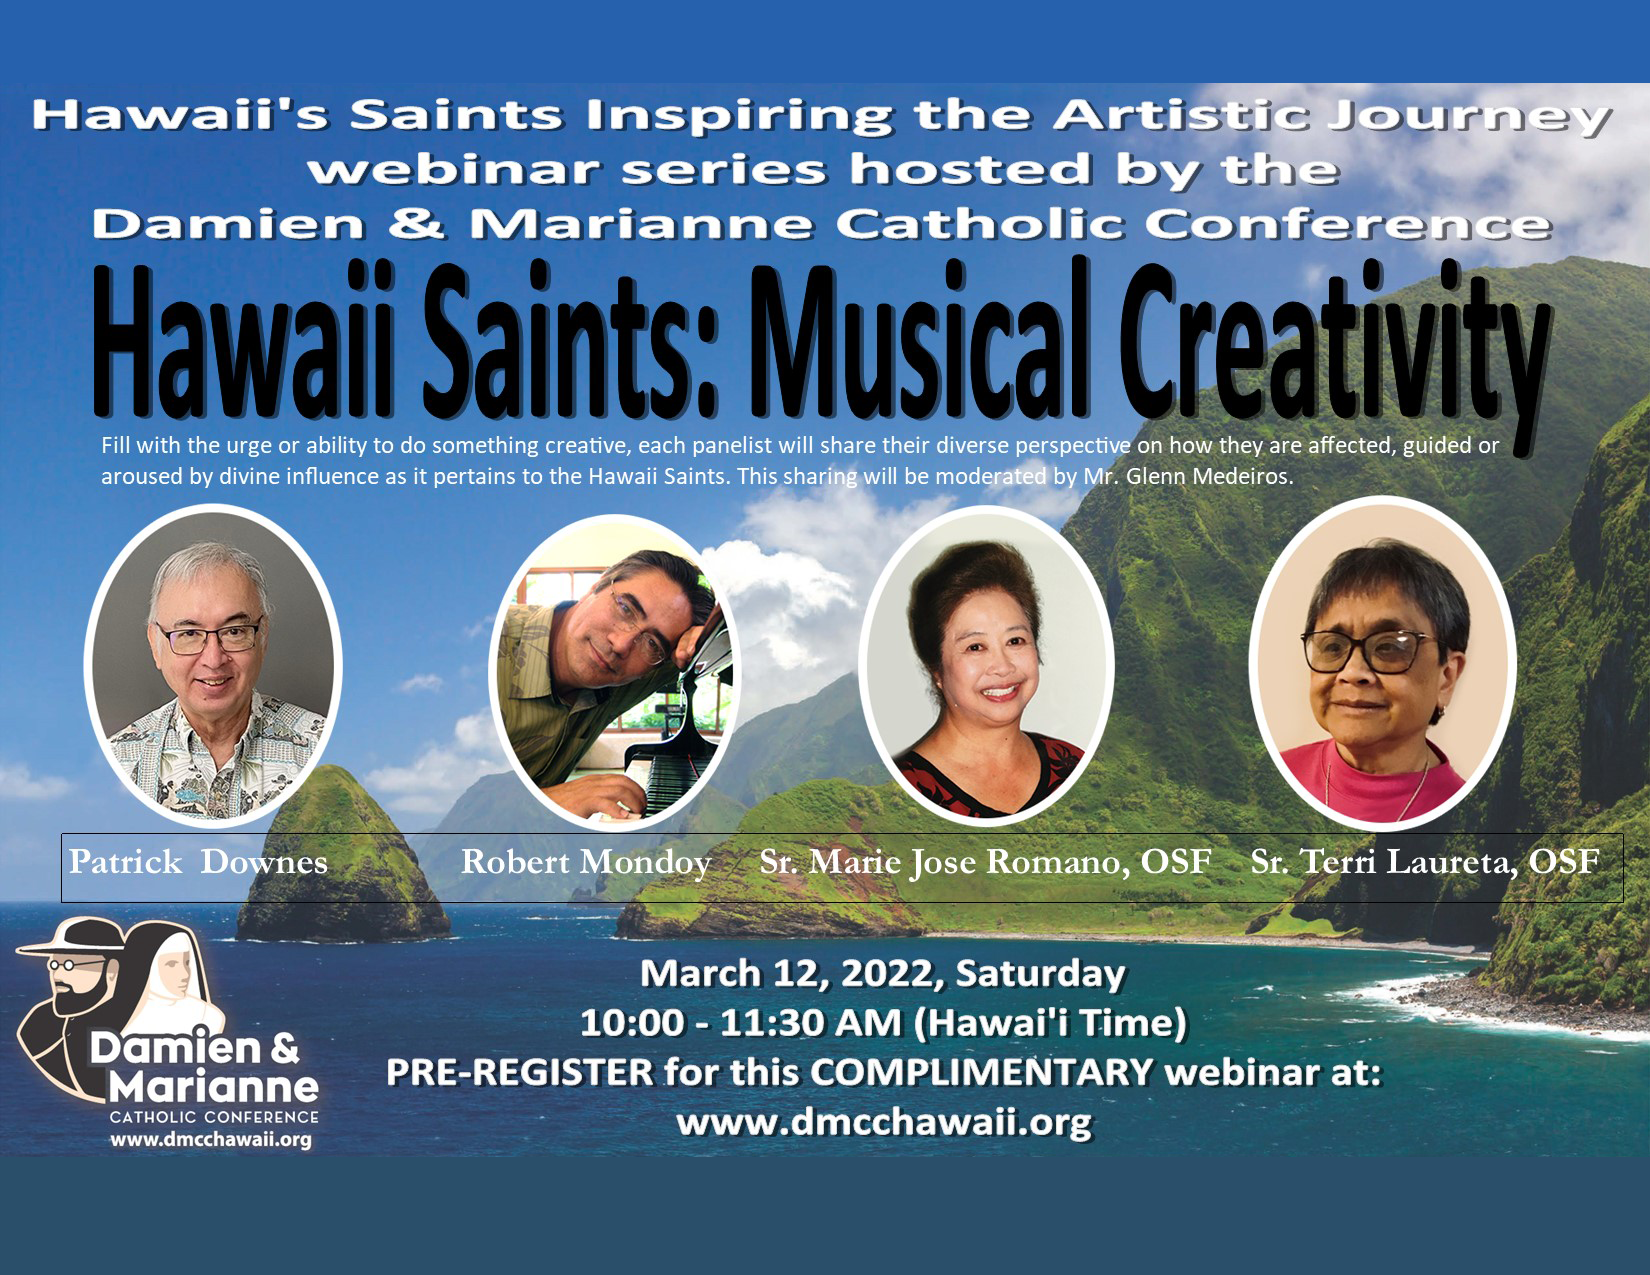 Hawaii Saints: Musical Creativity